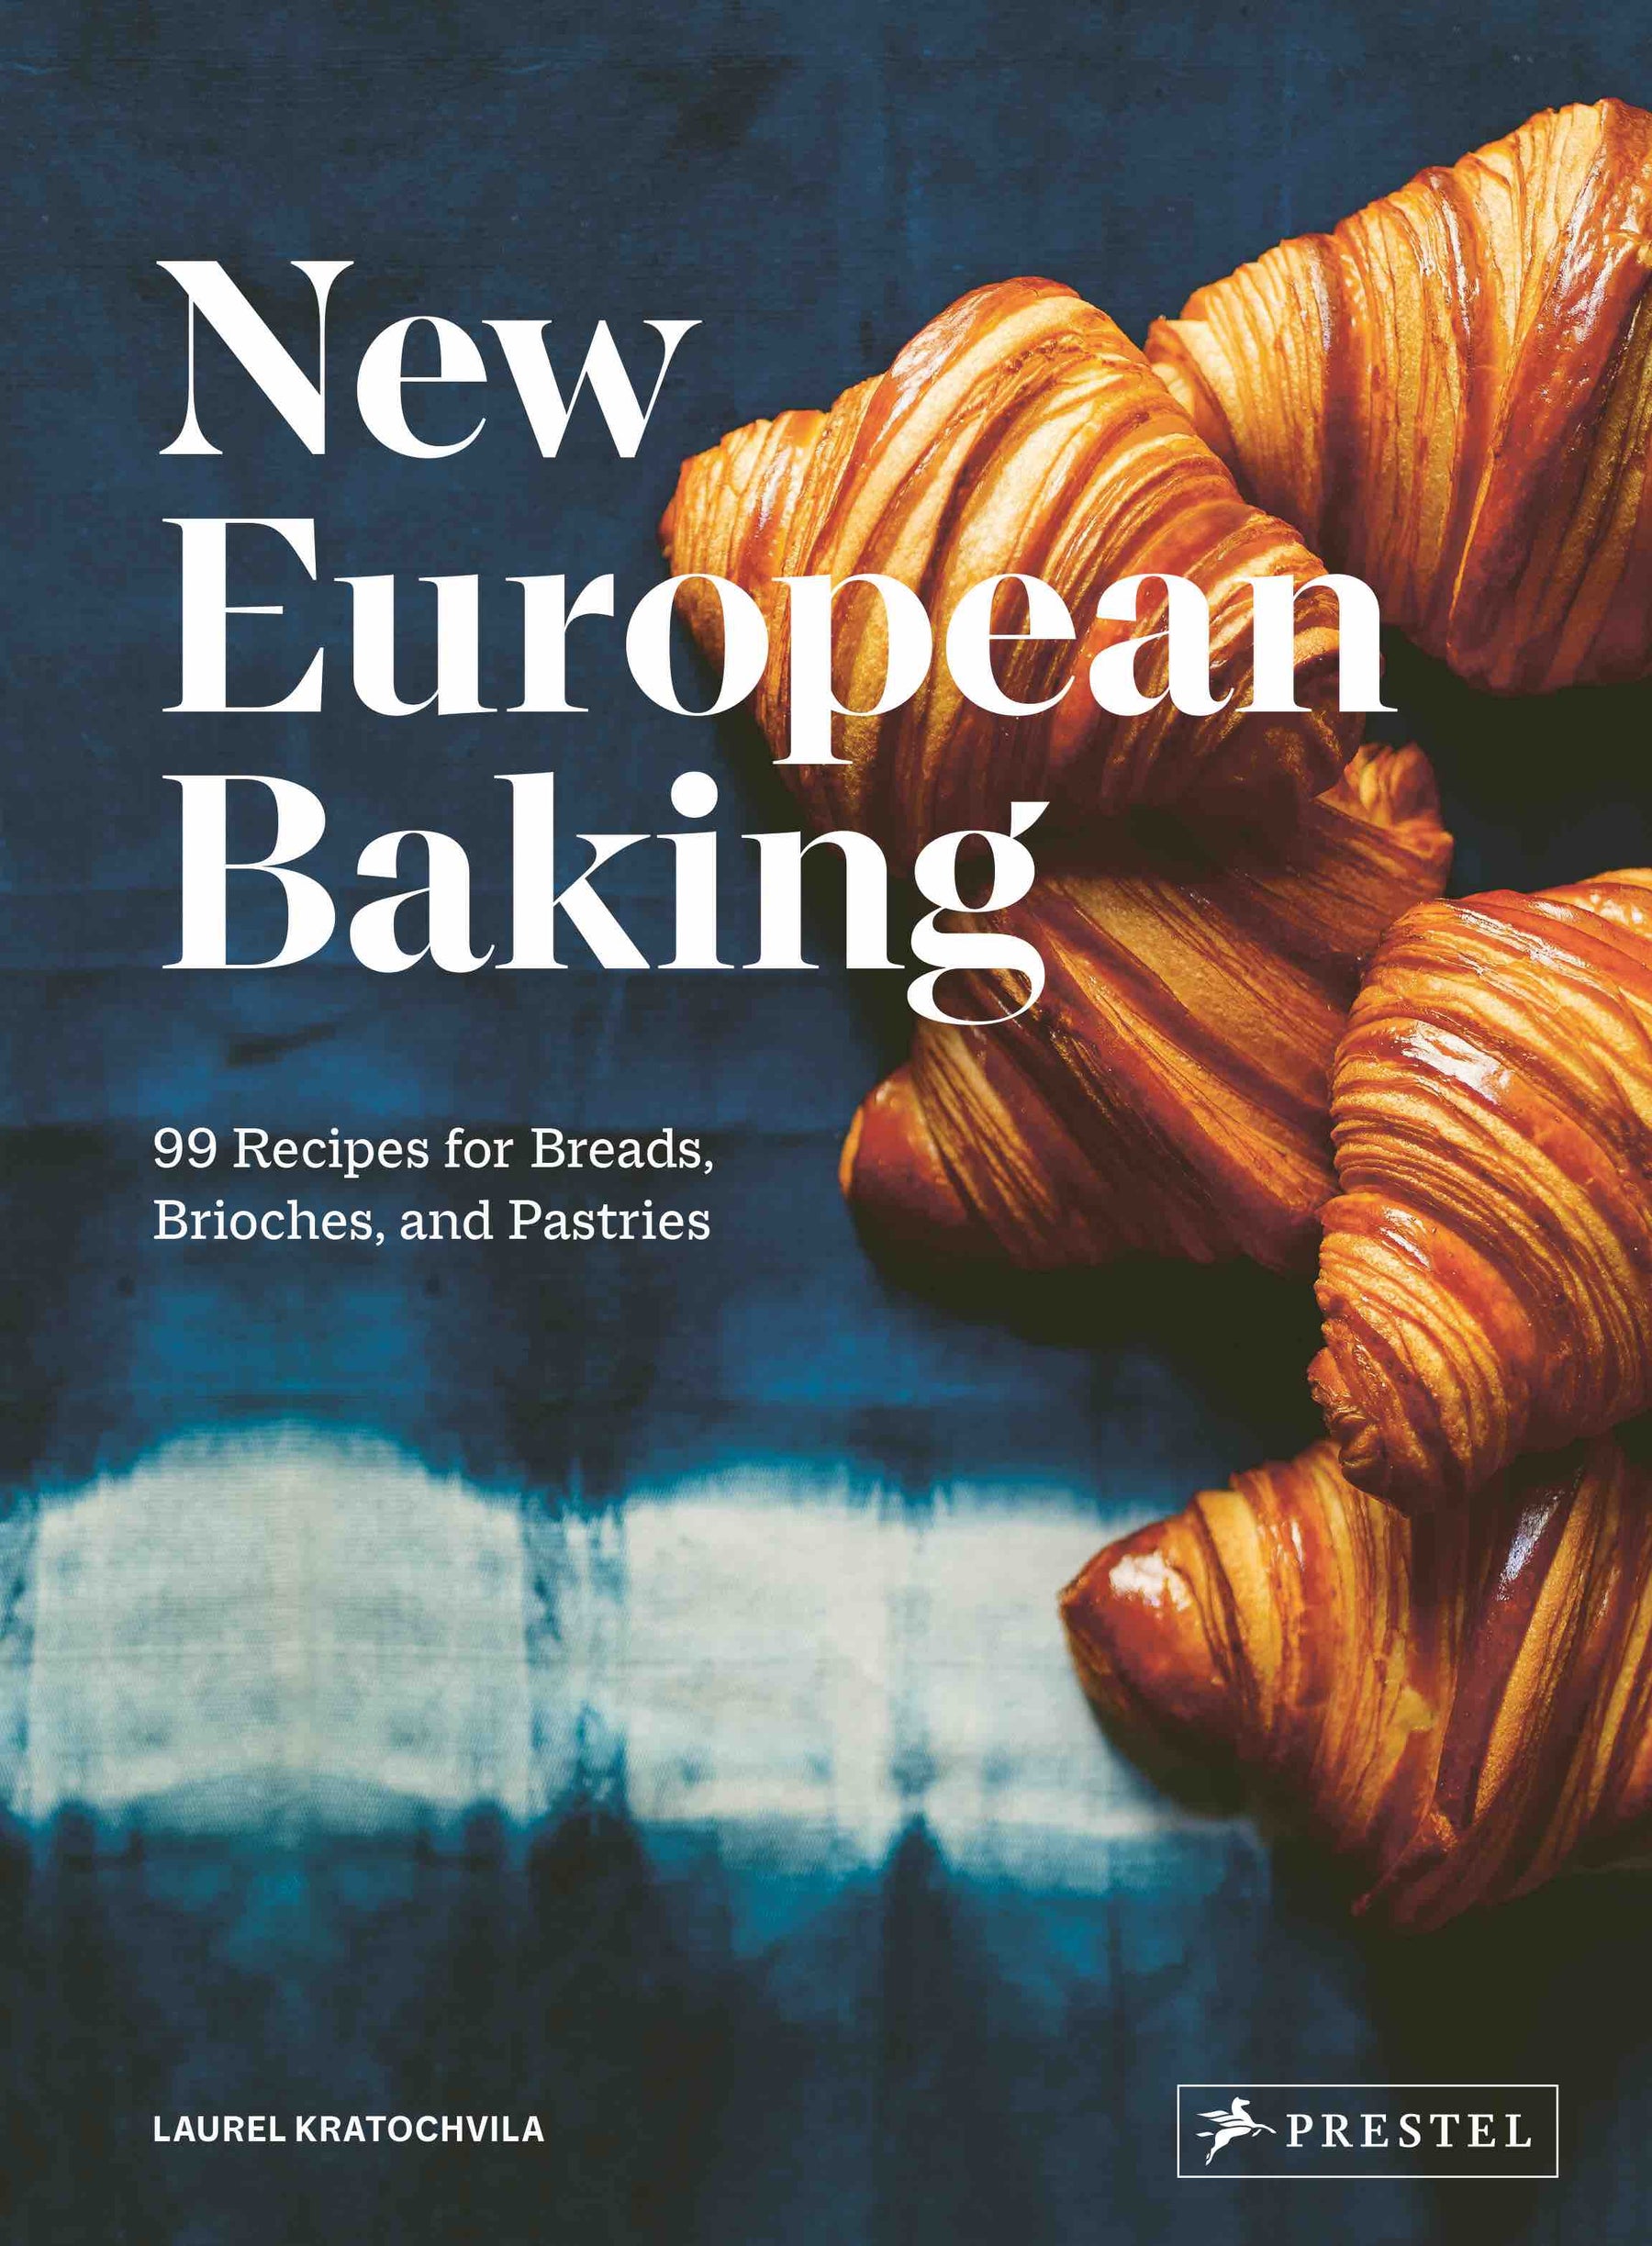 New European Baking | by Laurel Kratochvila - Random House - Bluecashew Kitchen Homestead